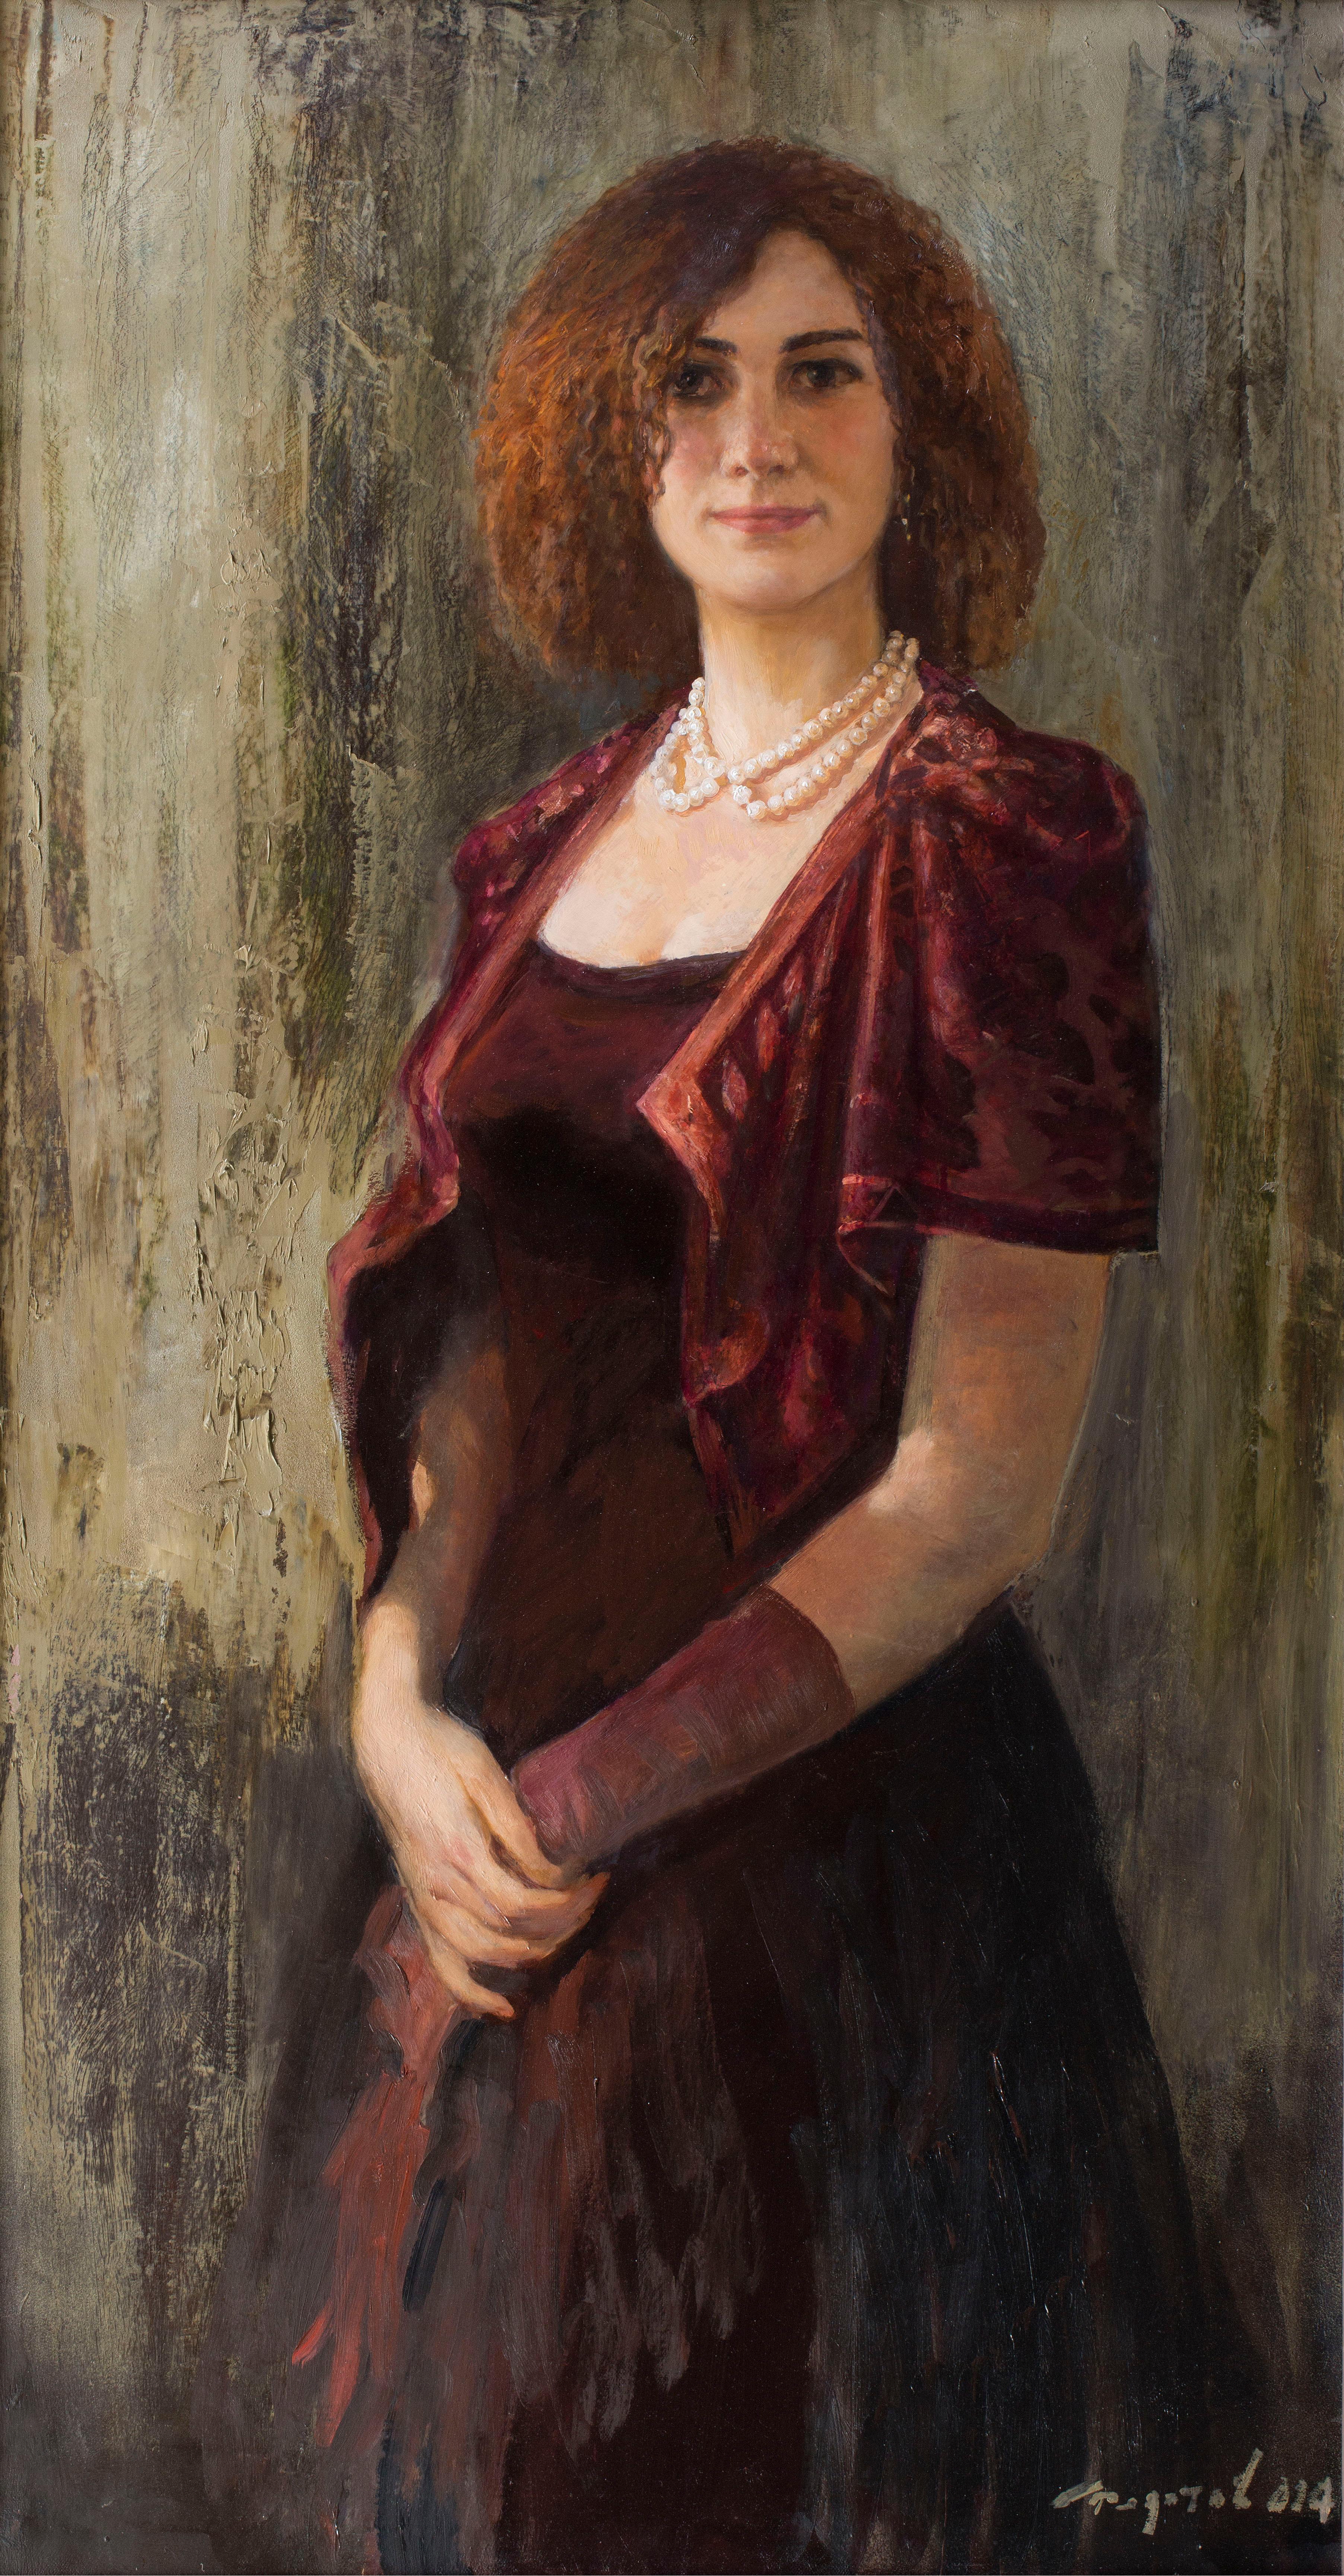 Woman's portrait. Original modern art painting